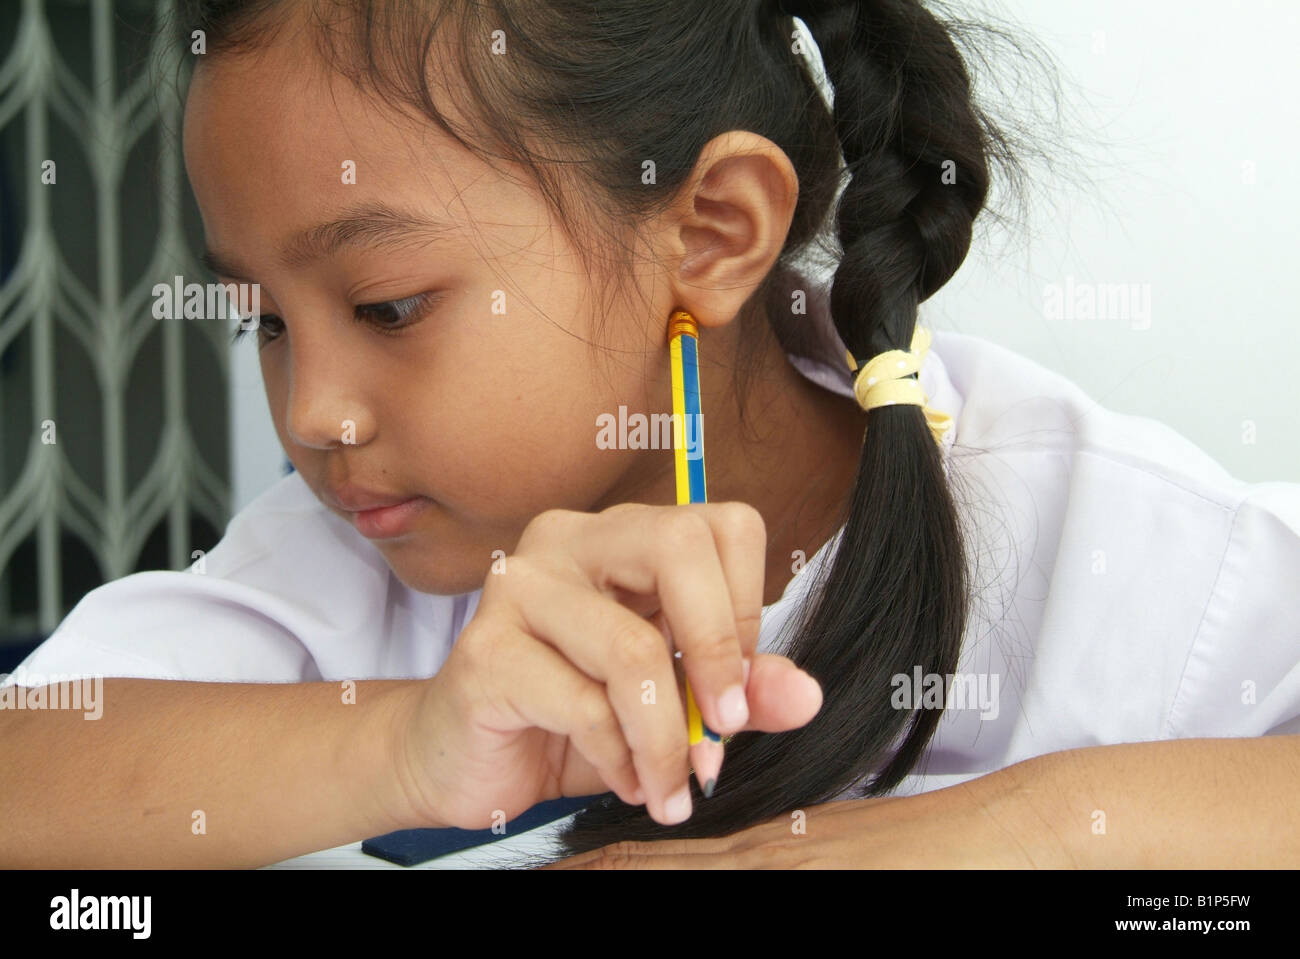 Portrait of Thai girl 8 years old in school uniform Stock Photo